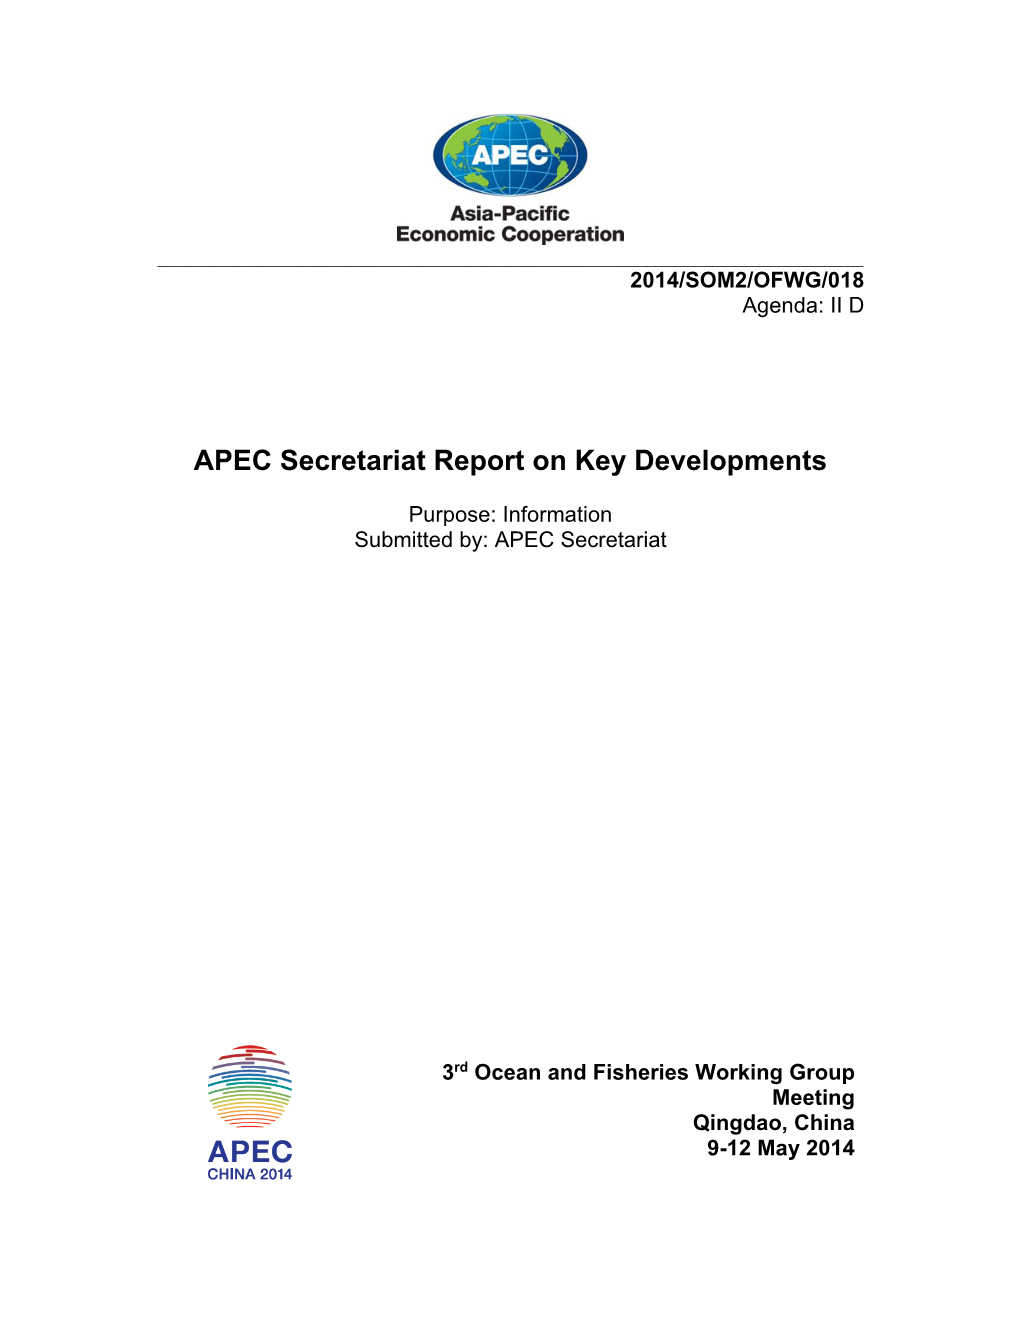 APEC Secretariat Report on Key Developments